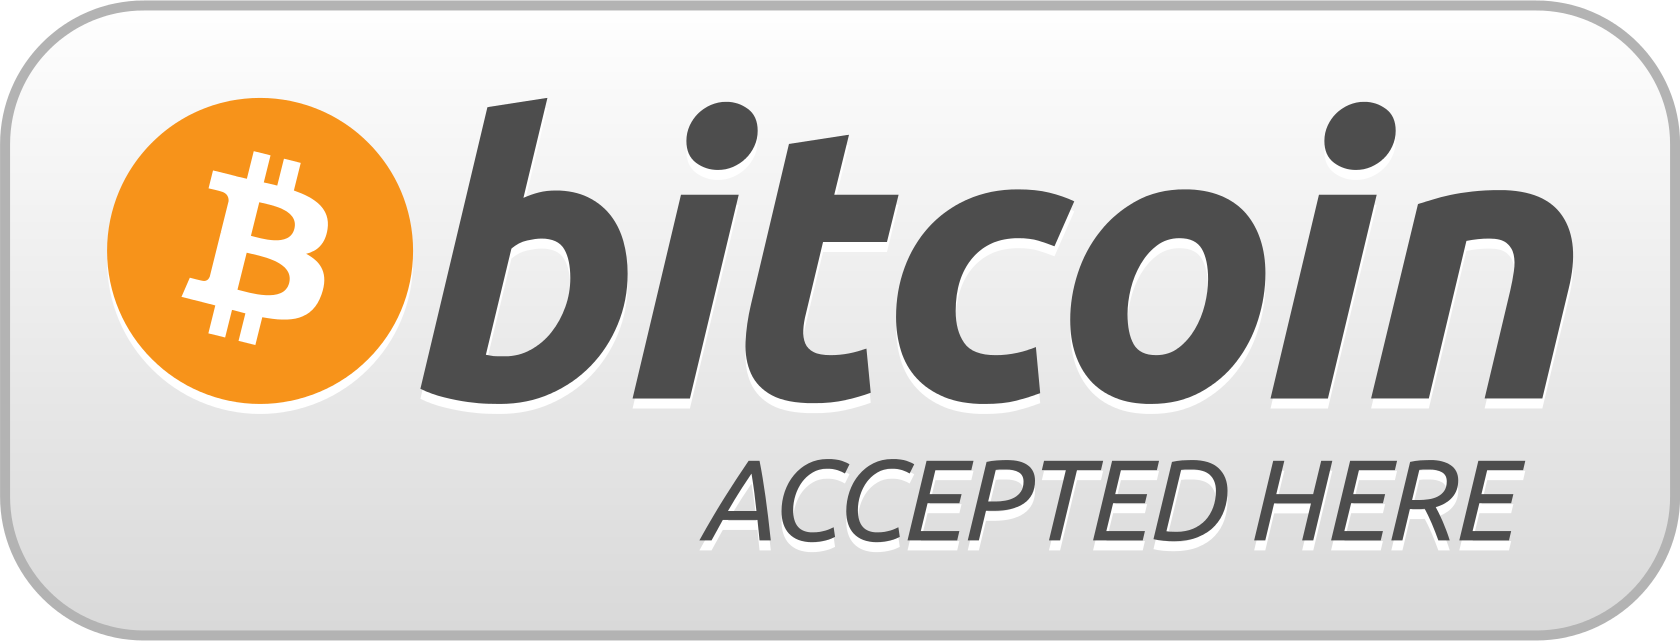 Bitcoin accepted for cannabis seeds